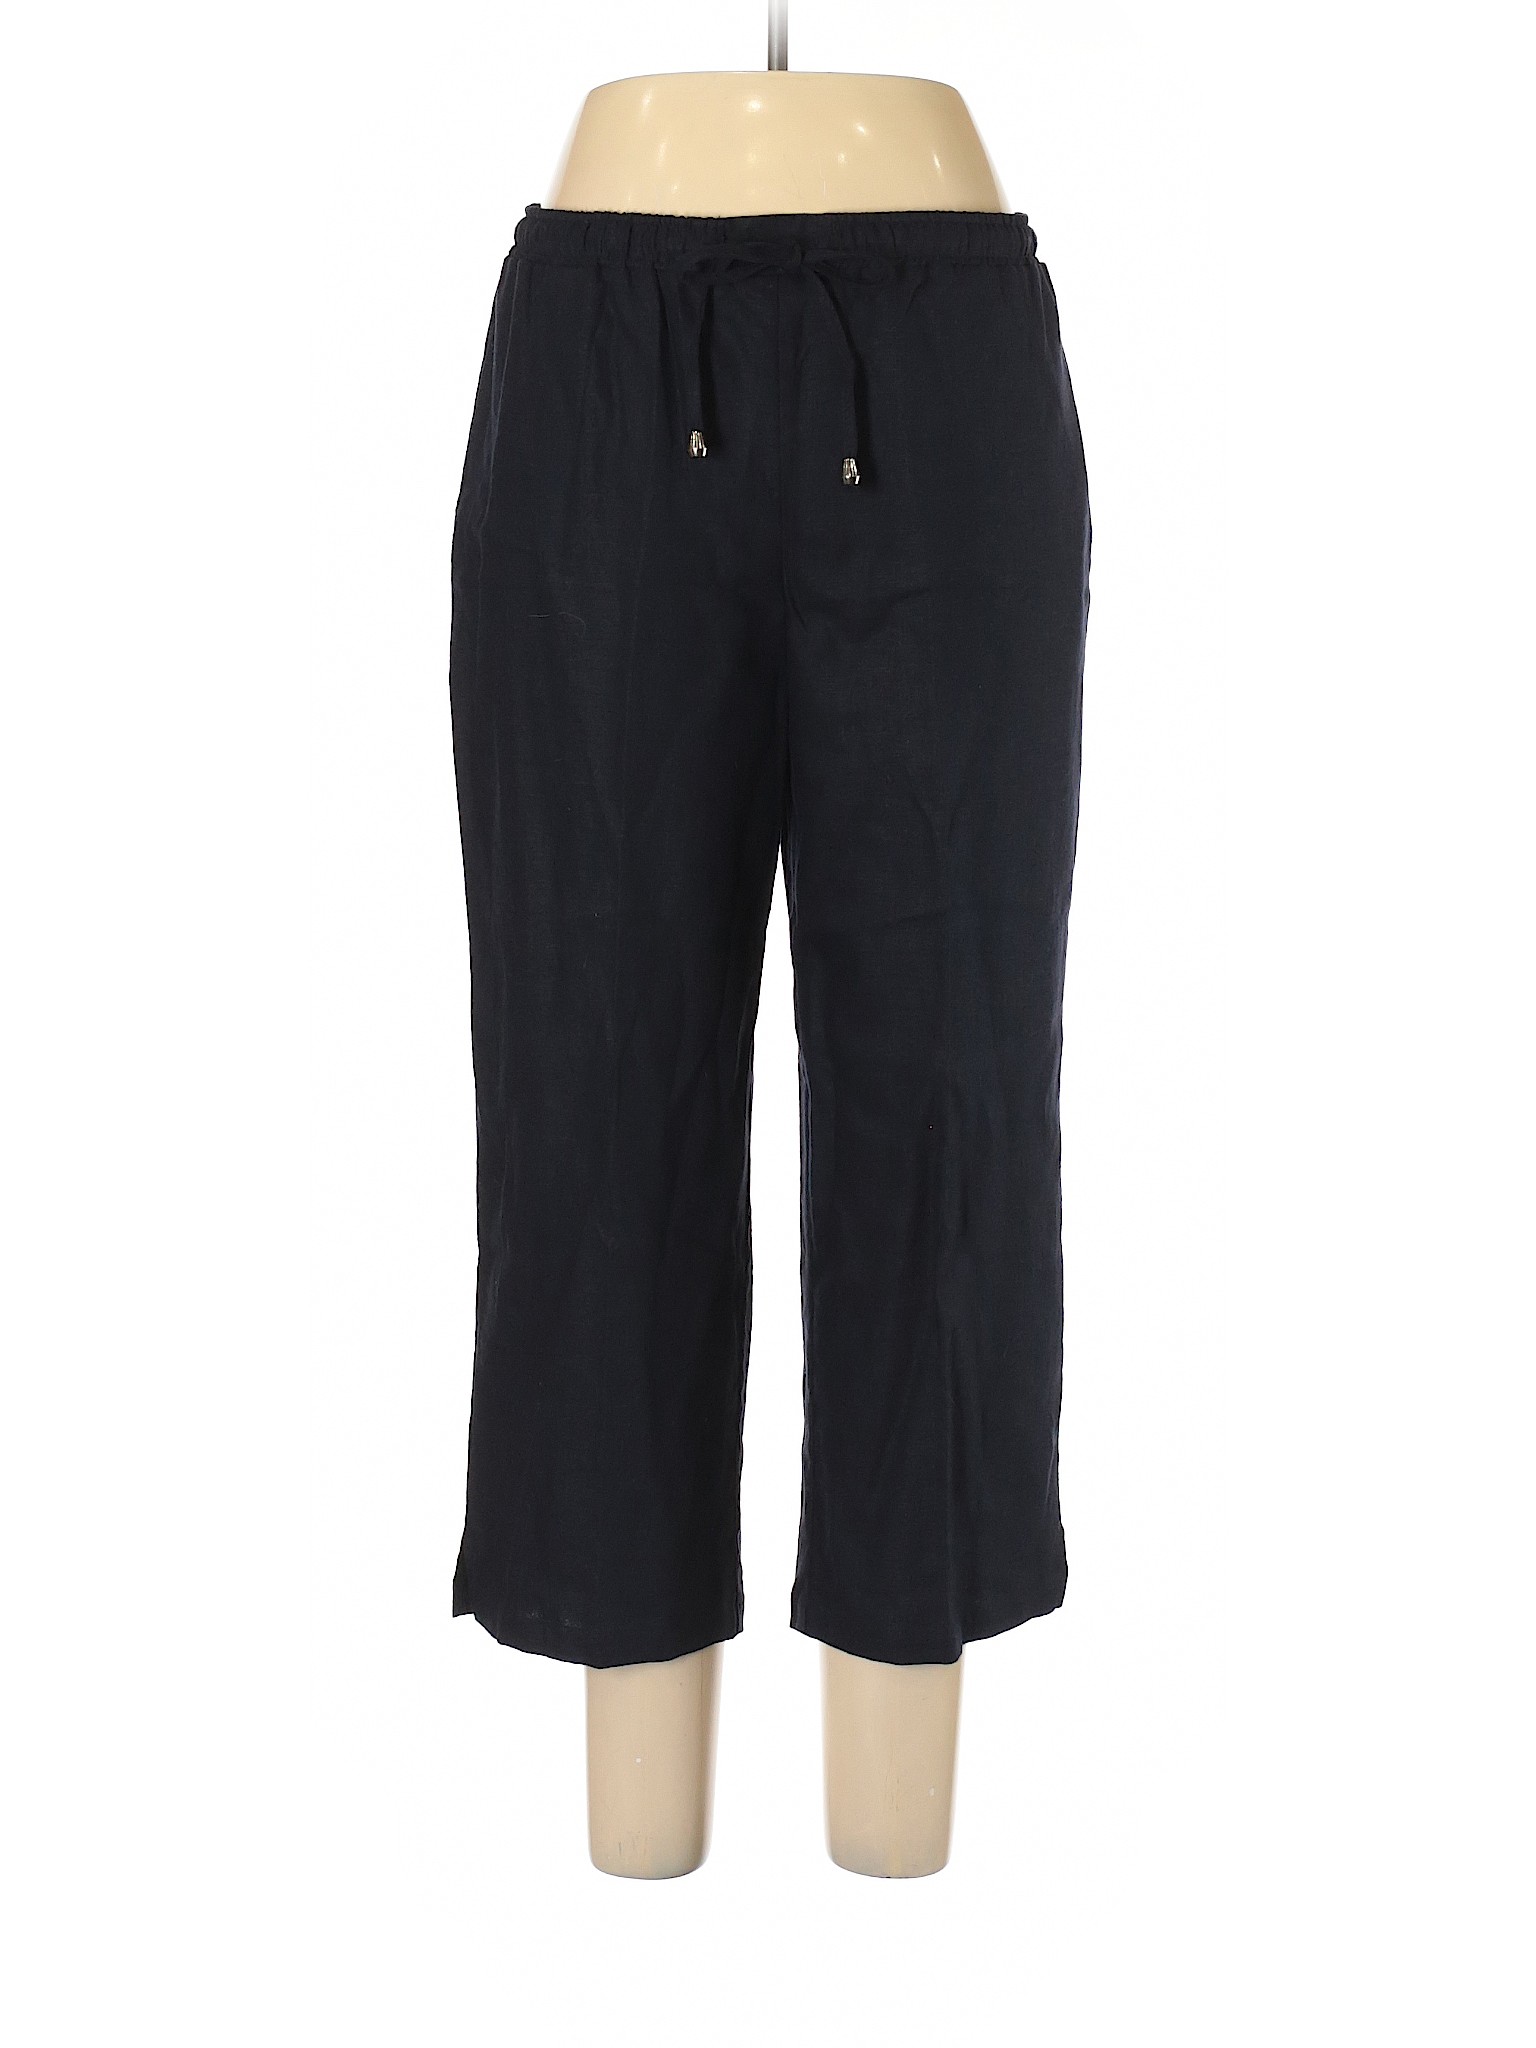 Sag Harbor Black Blue Linen Pants Size L (Petite) - 66% off | thredUP